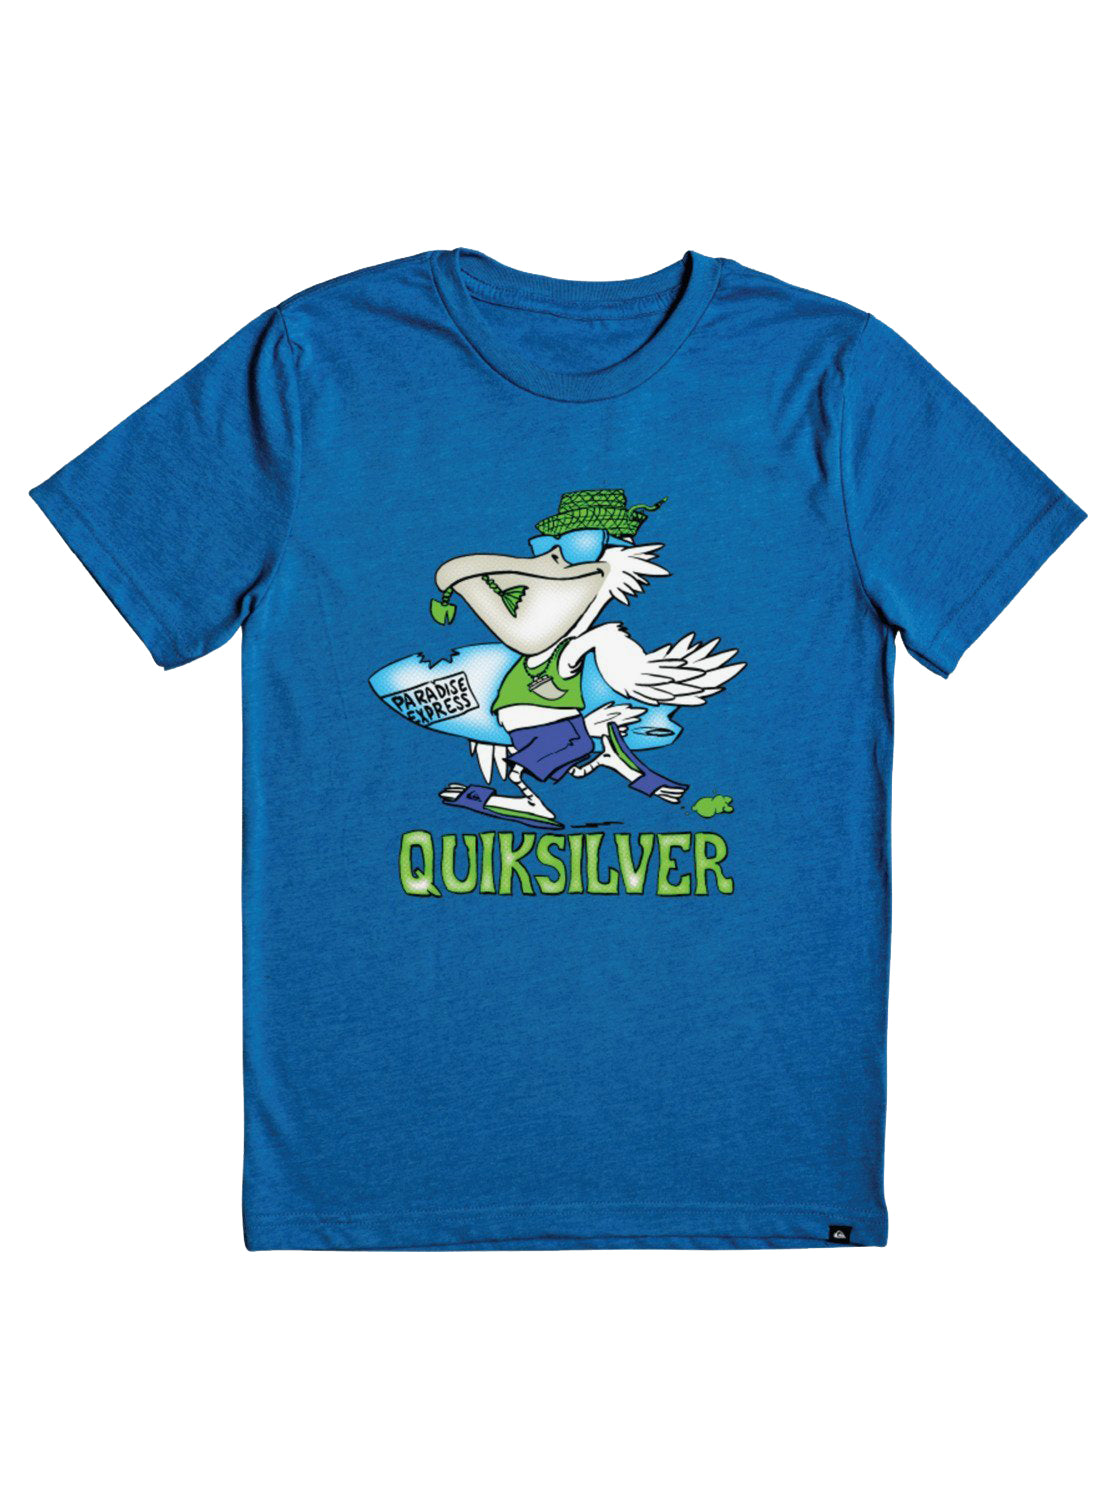 Quiksilver Kids Pelican Shred SS Tee